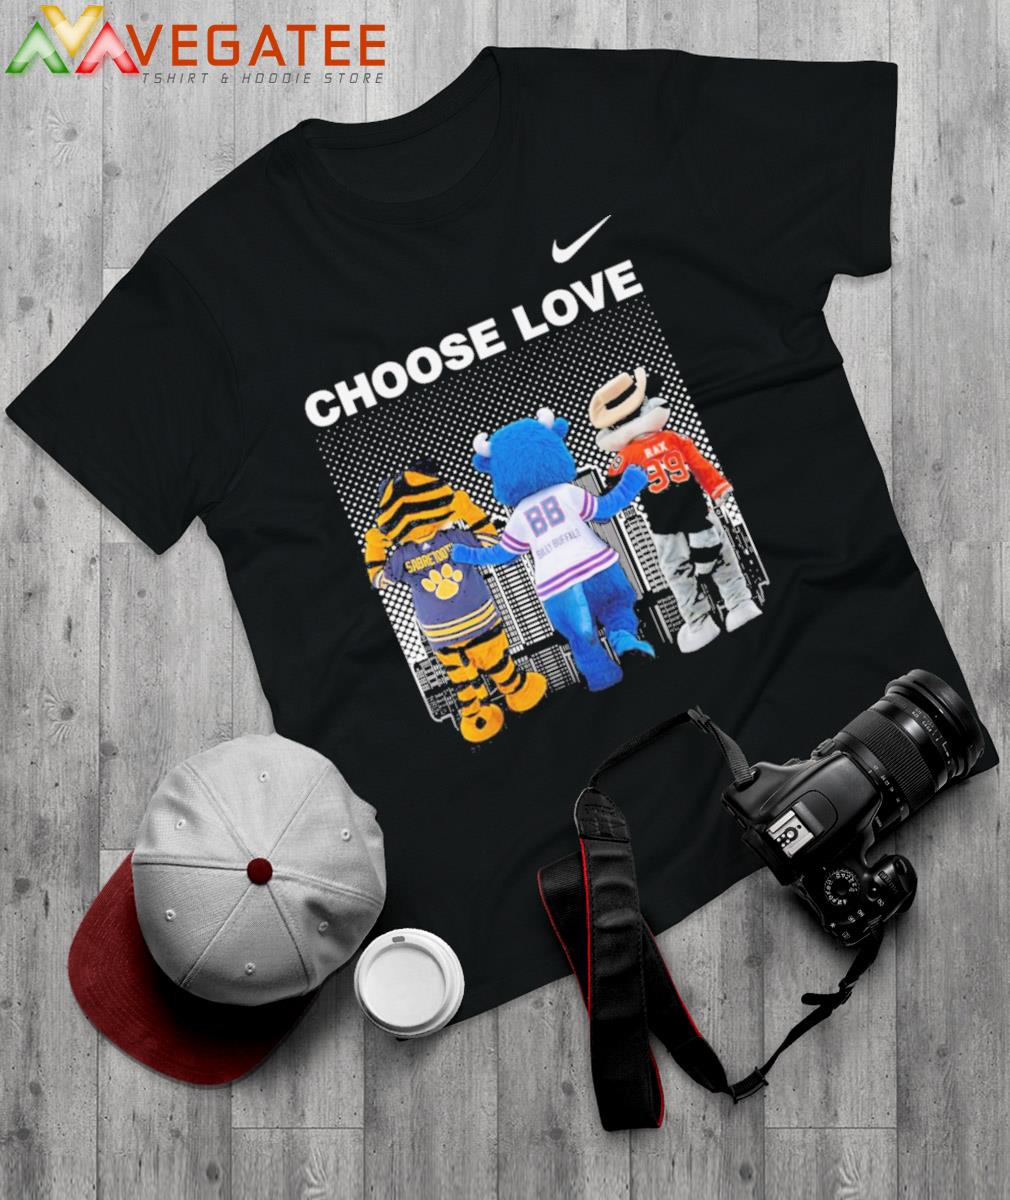 choose love nike buffalo shirt